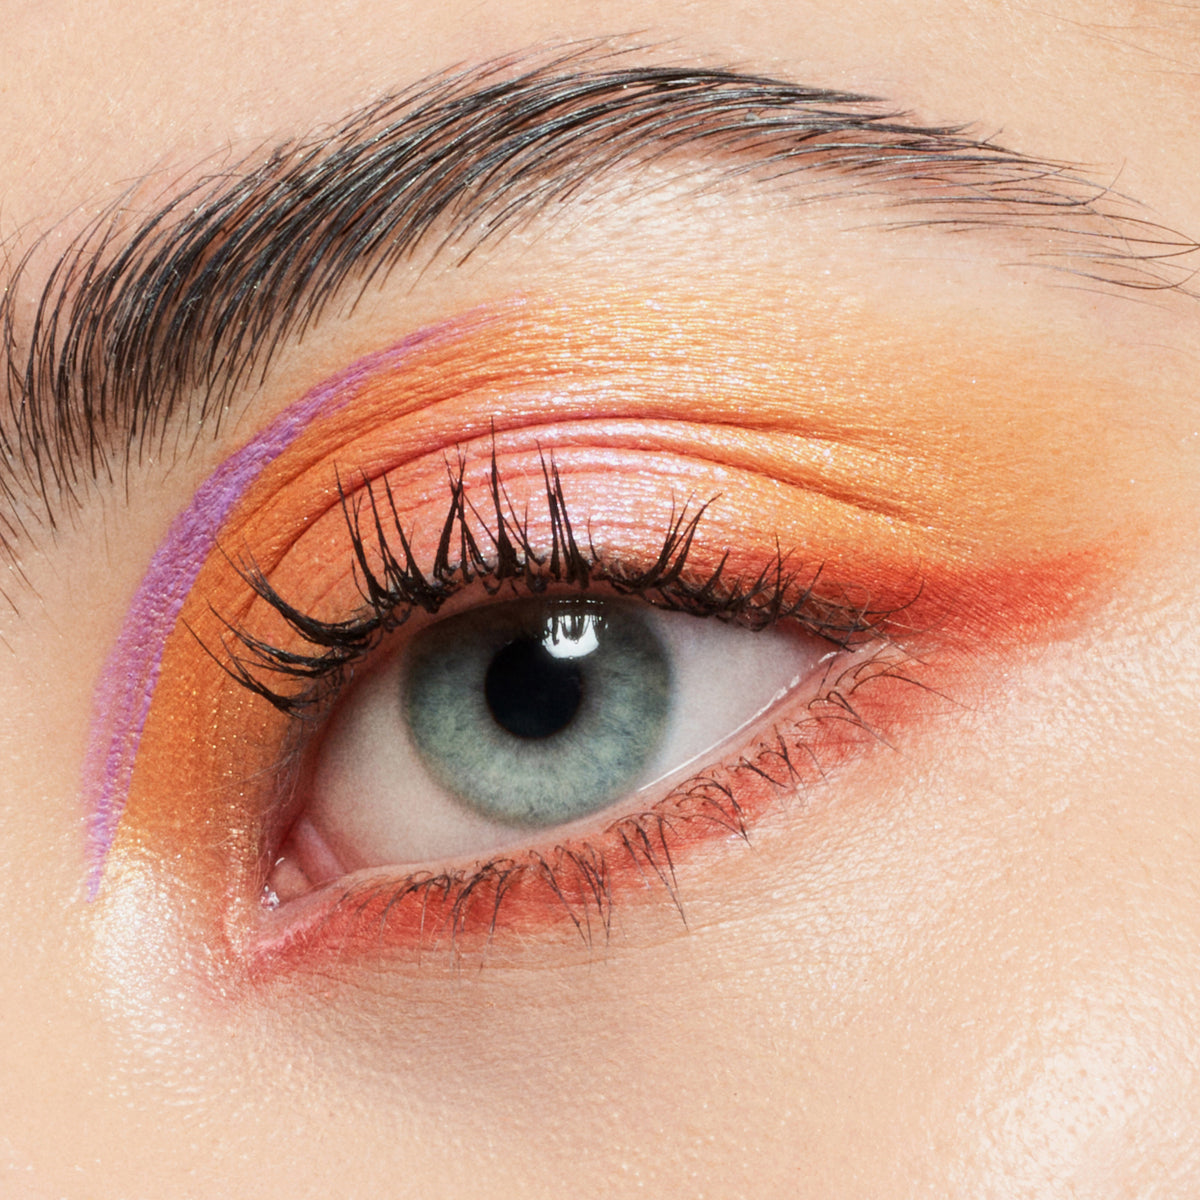 Catrice Cosmetics | Colour Blast Eyeshadow Palette 010